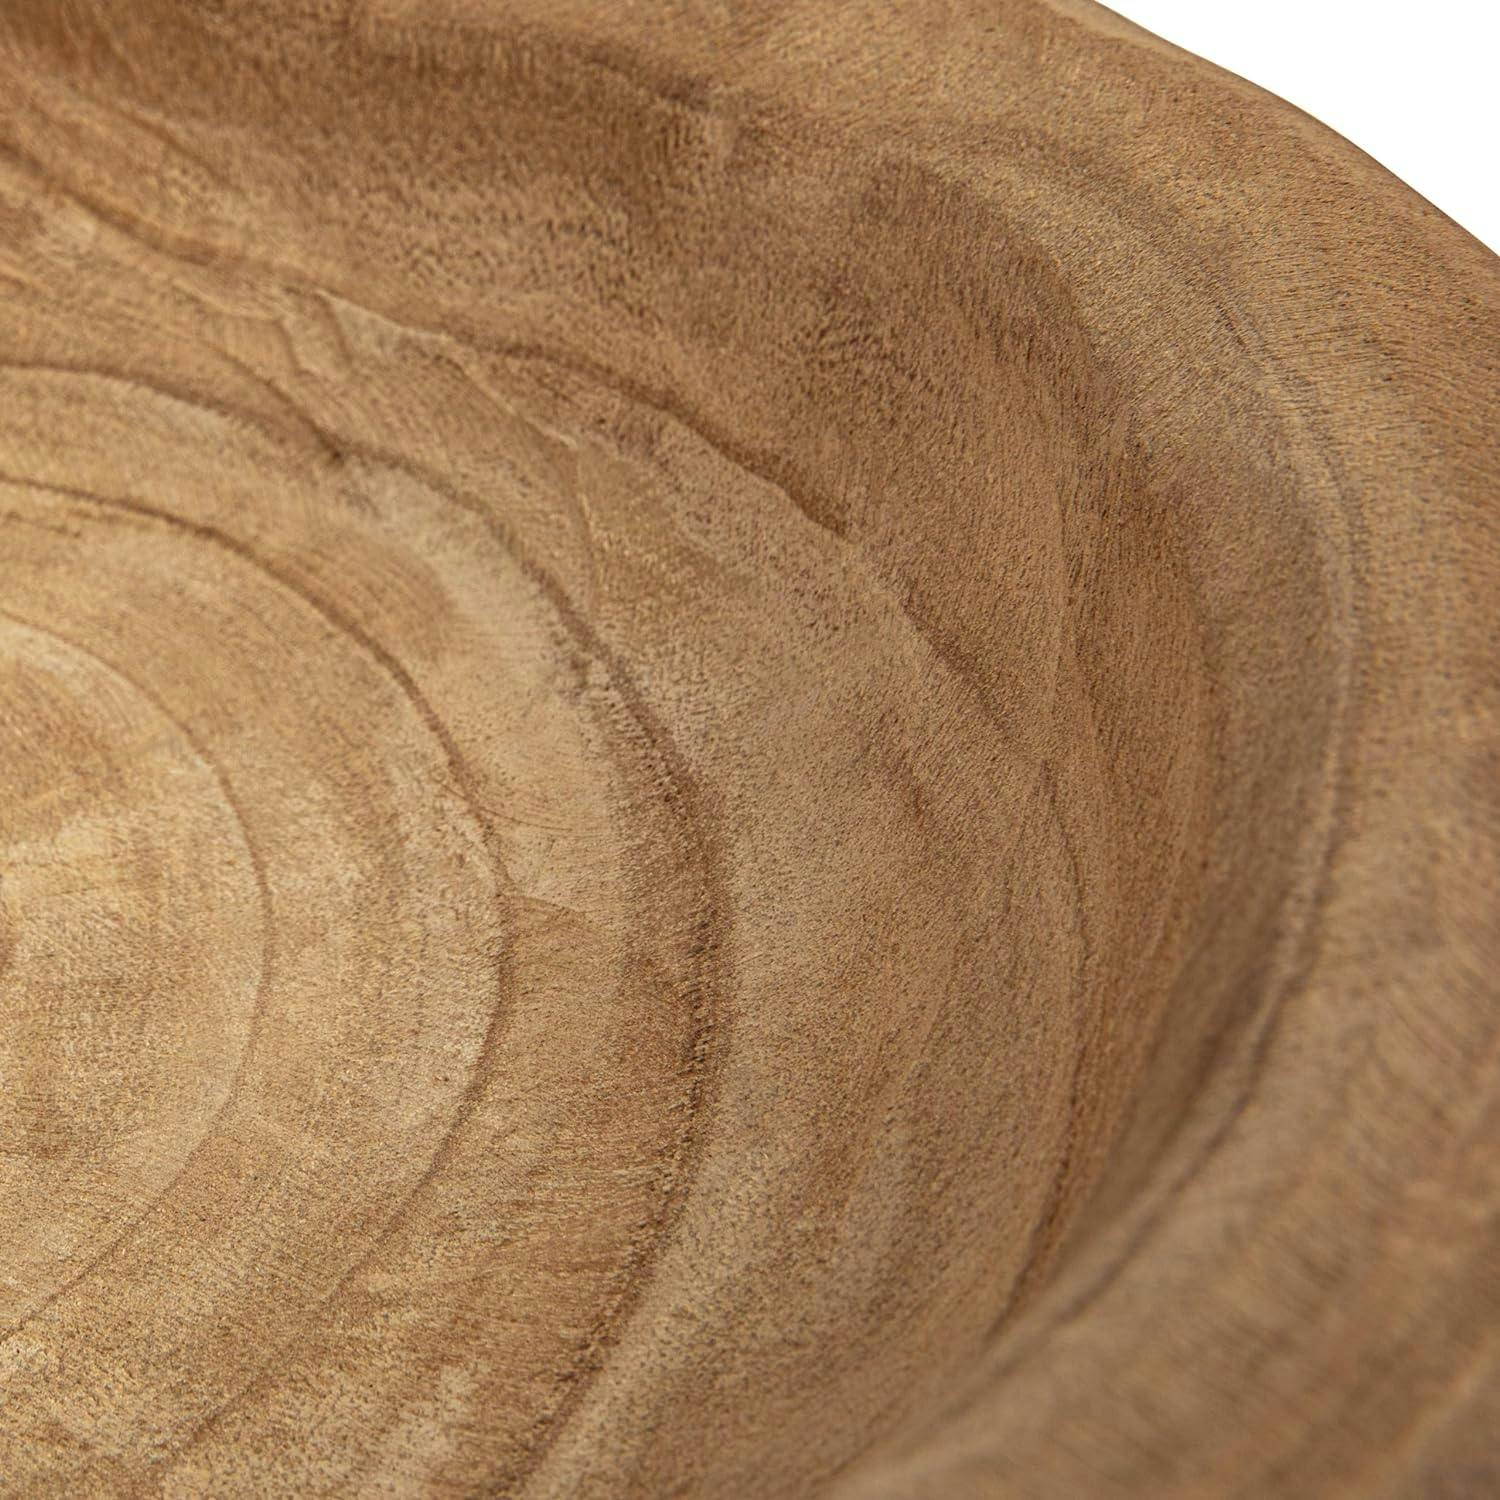 Handcrafted Earthy Paulownia Wood Decorative Bowl Set - 19.8"